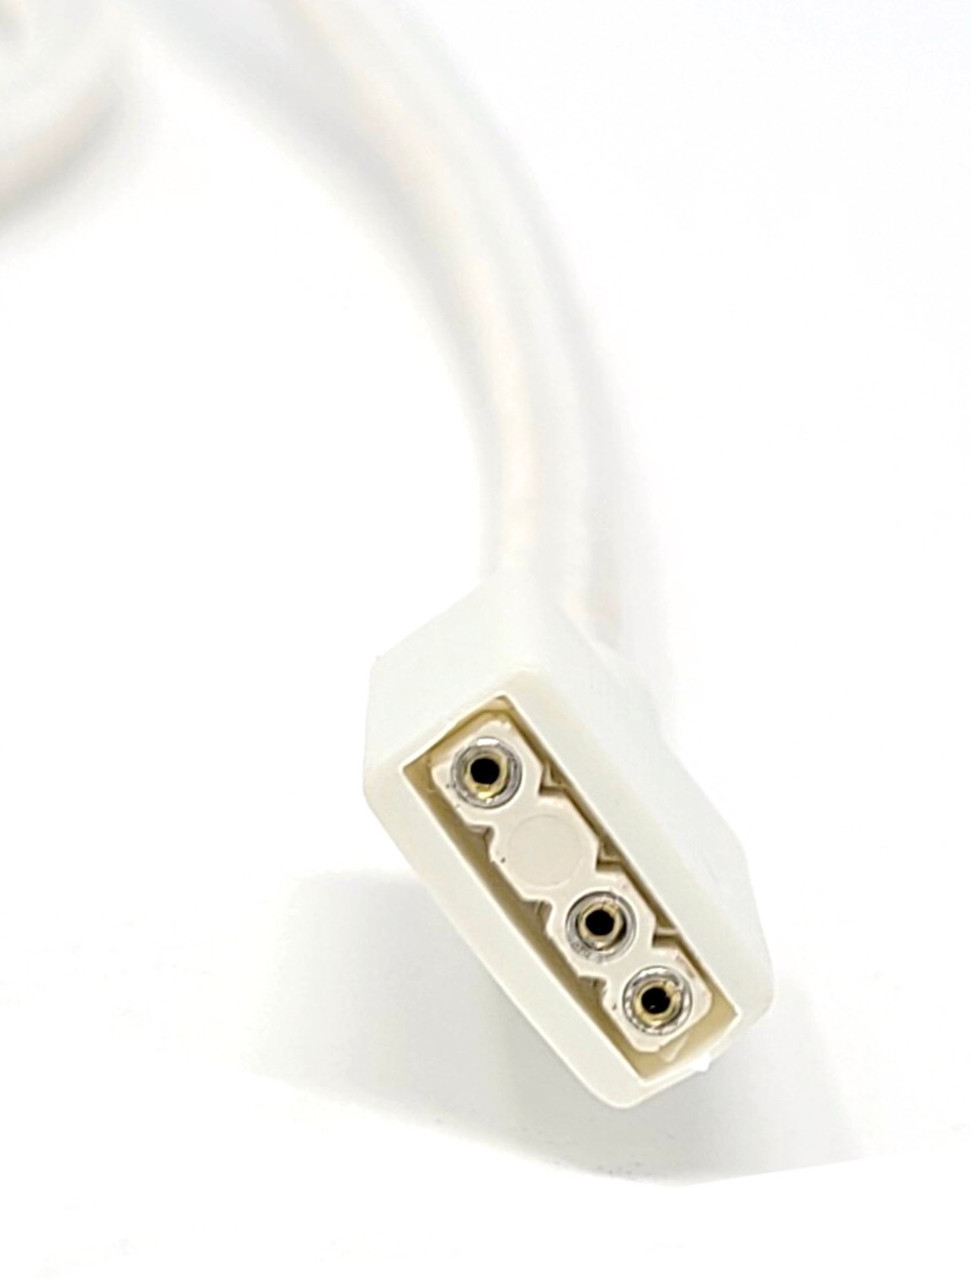 70cm Premium Sleeved 3-Pin 1 to 5 Addressable (ARGB) Splitter Cable (White)